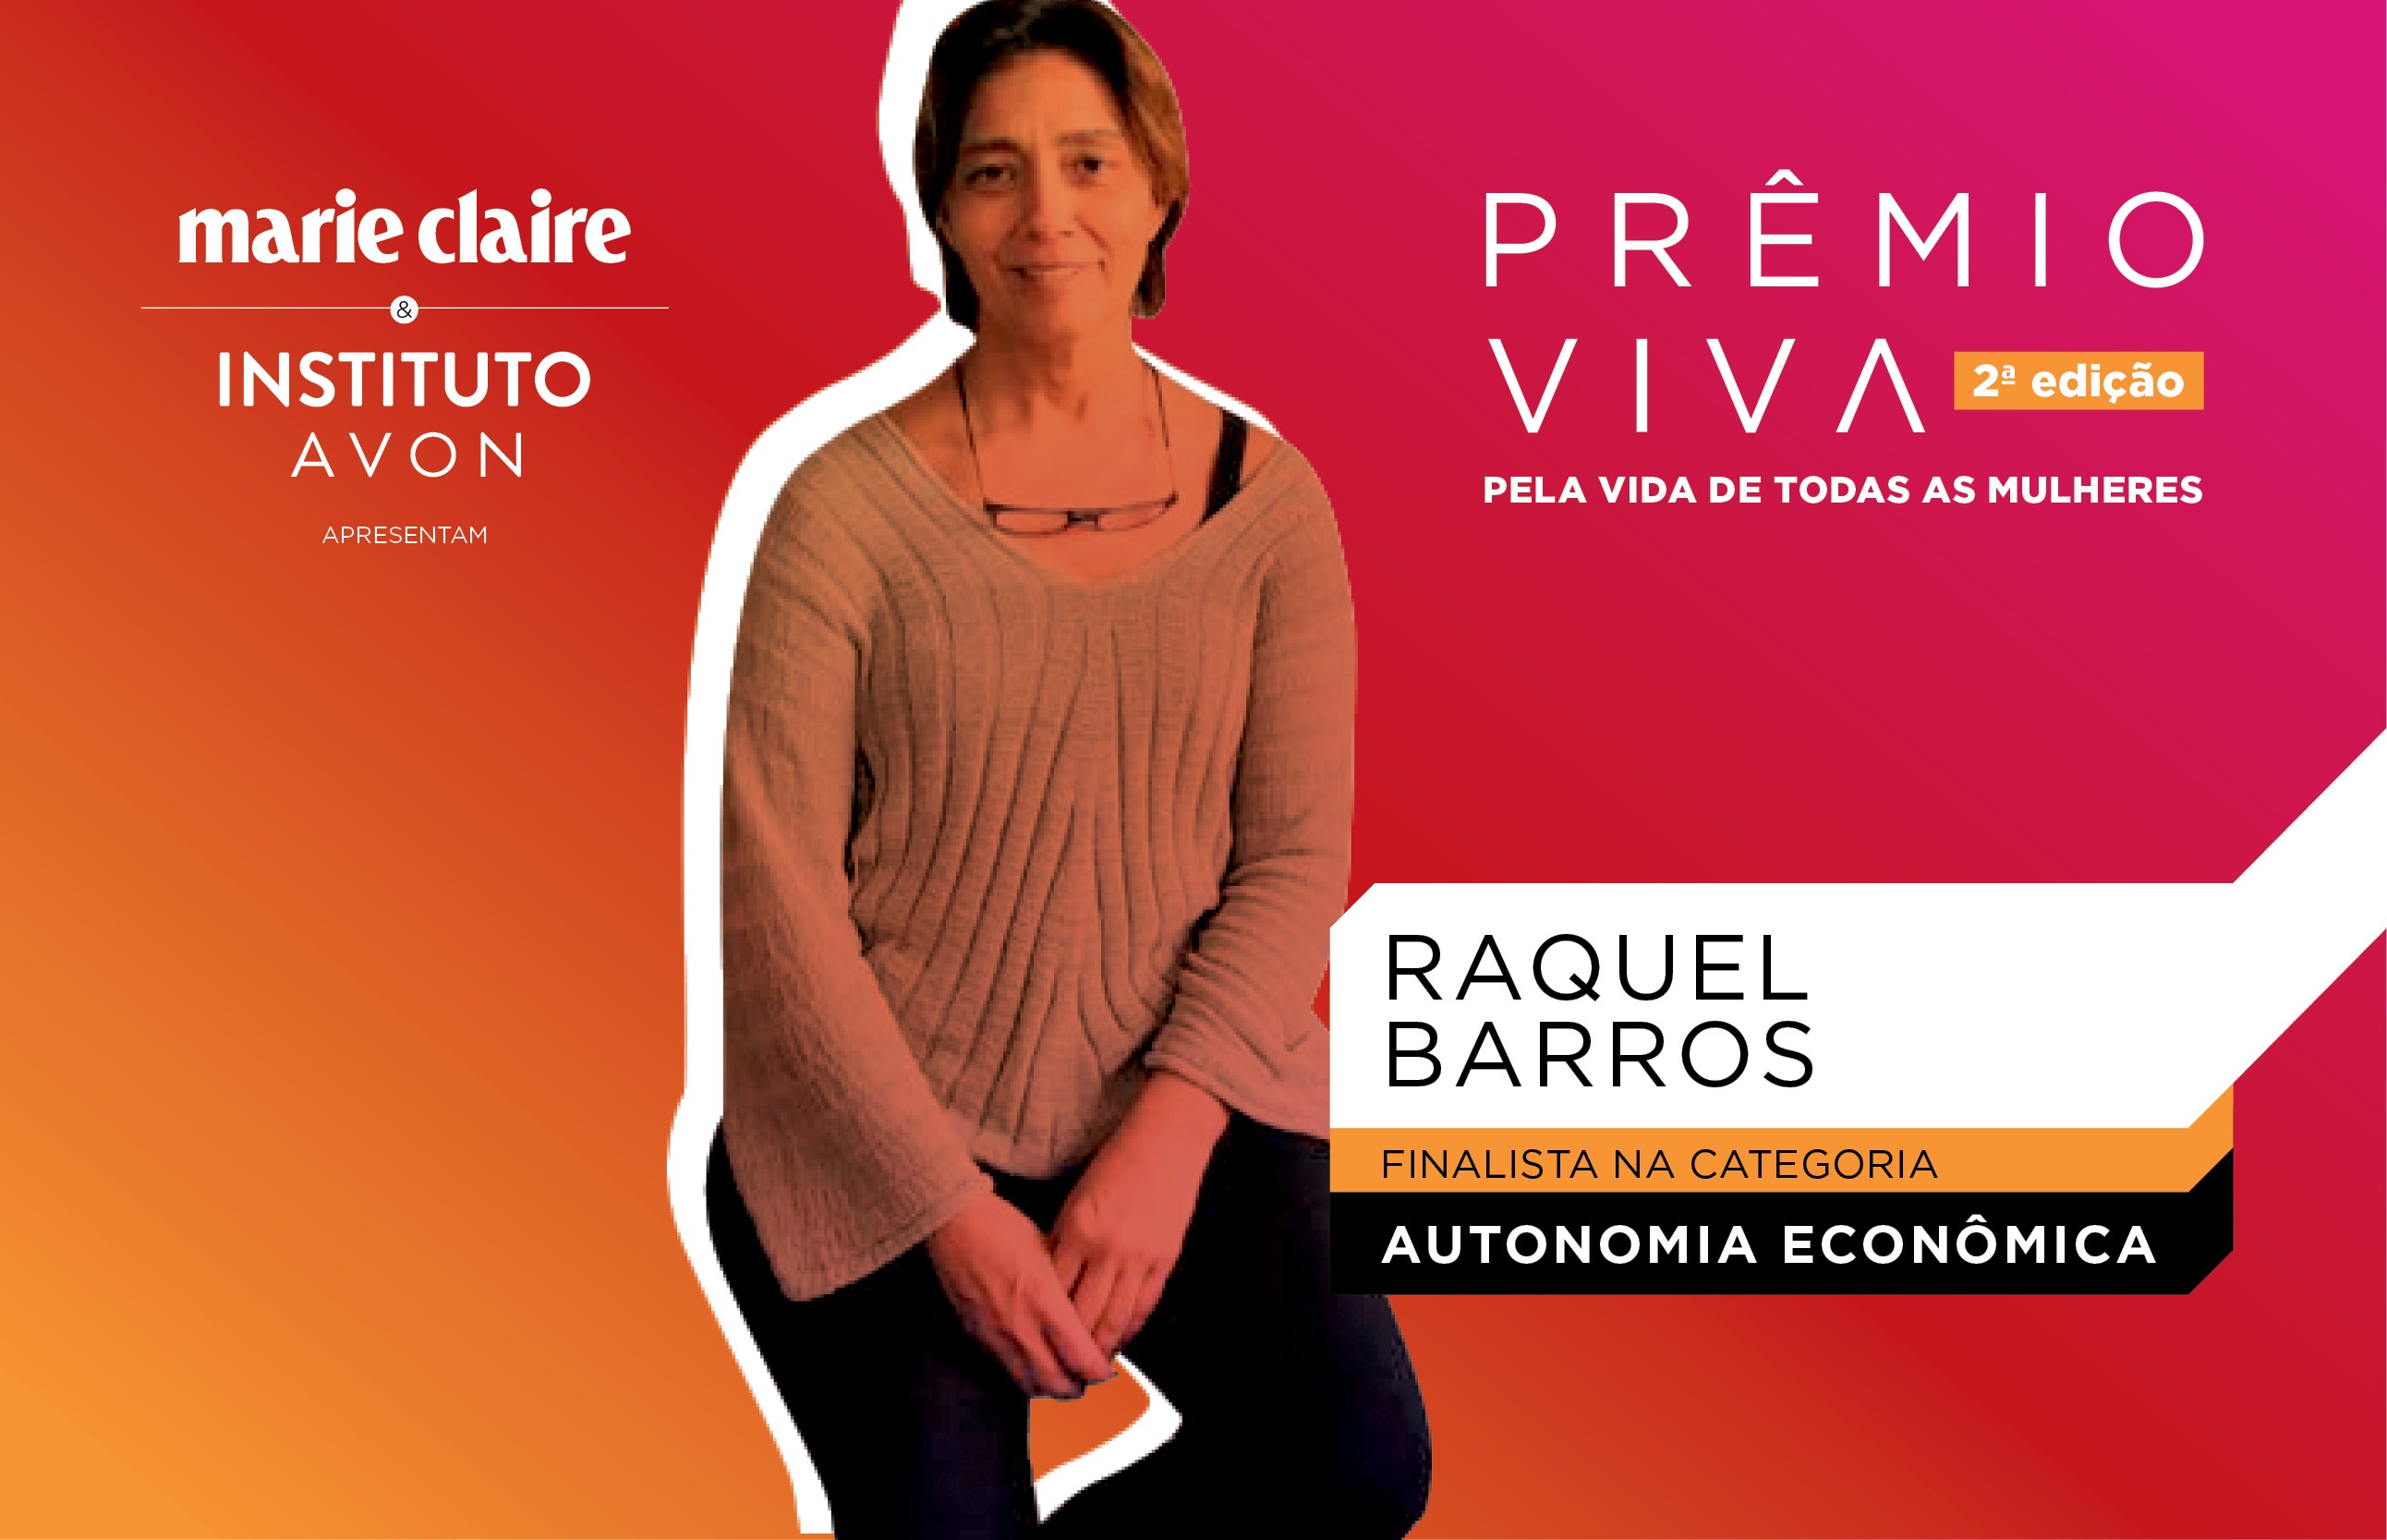 Raquel Barros,  finalista na categoria Autonomia Econômica (Foto: Marie Claire)